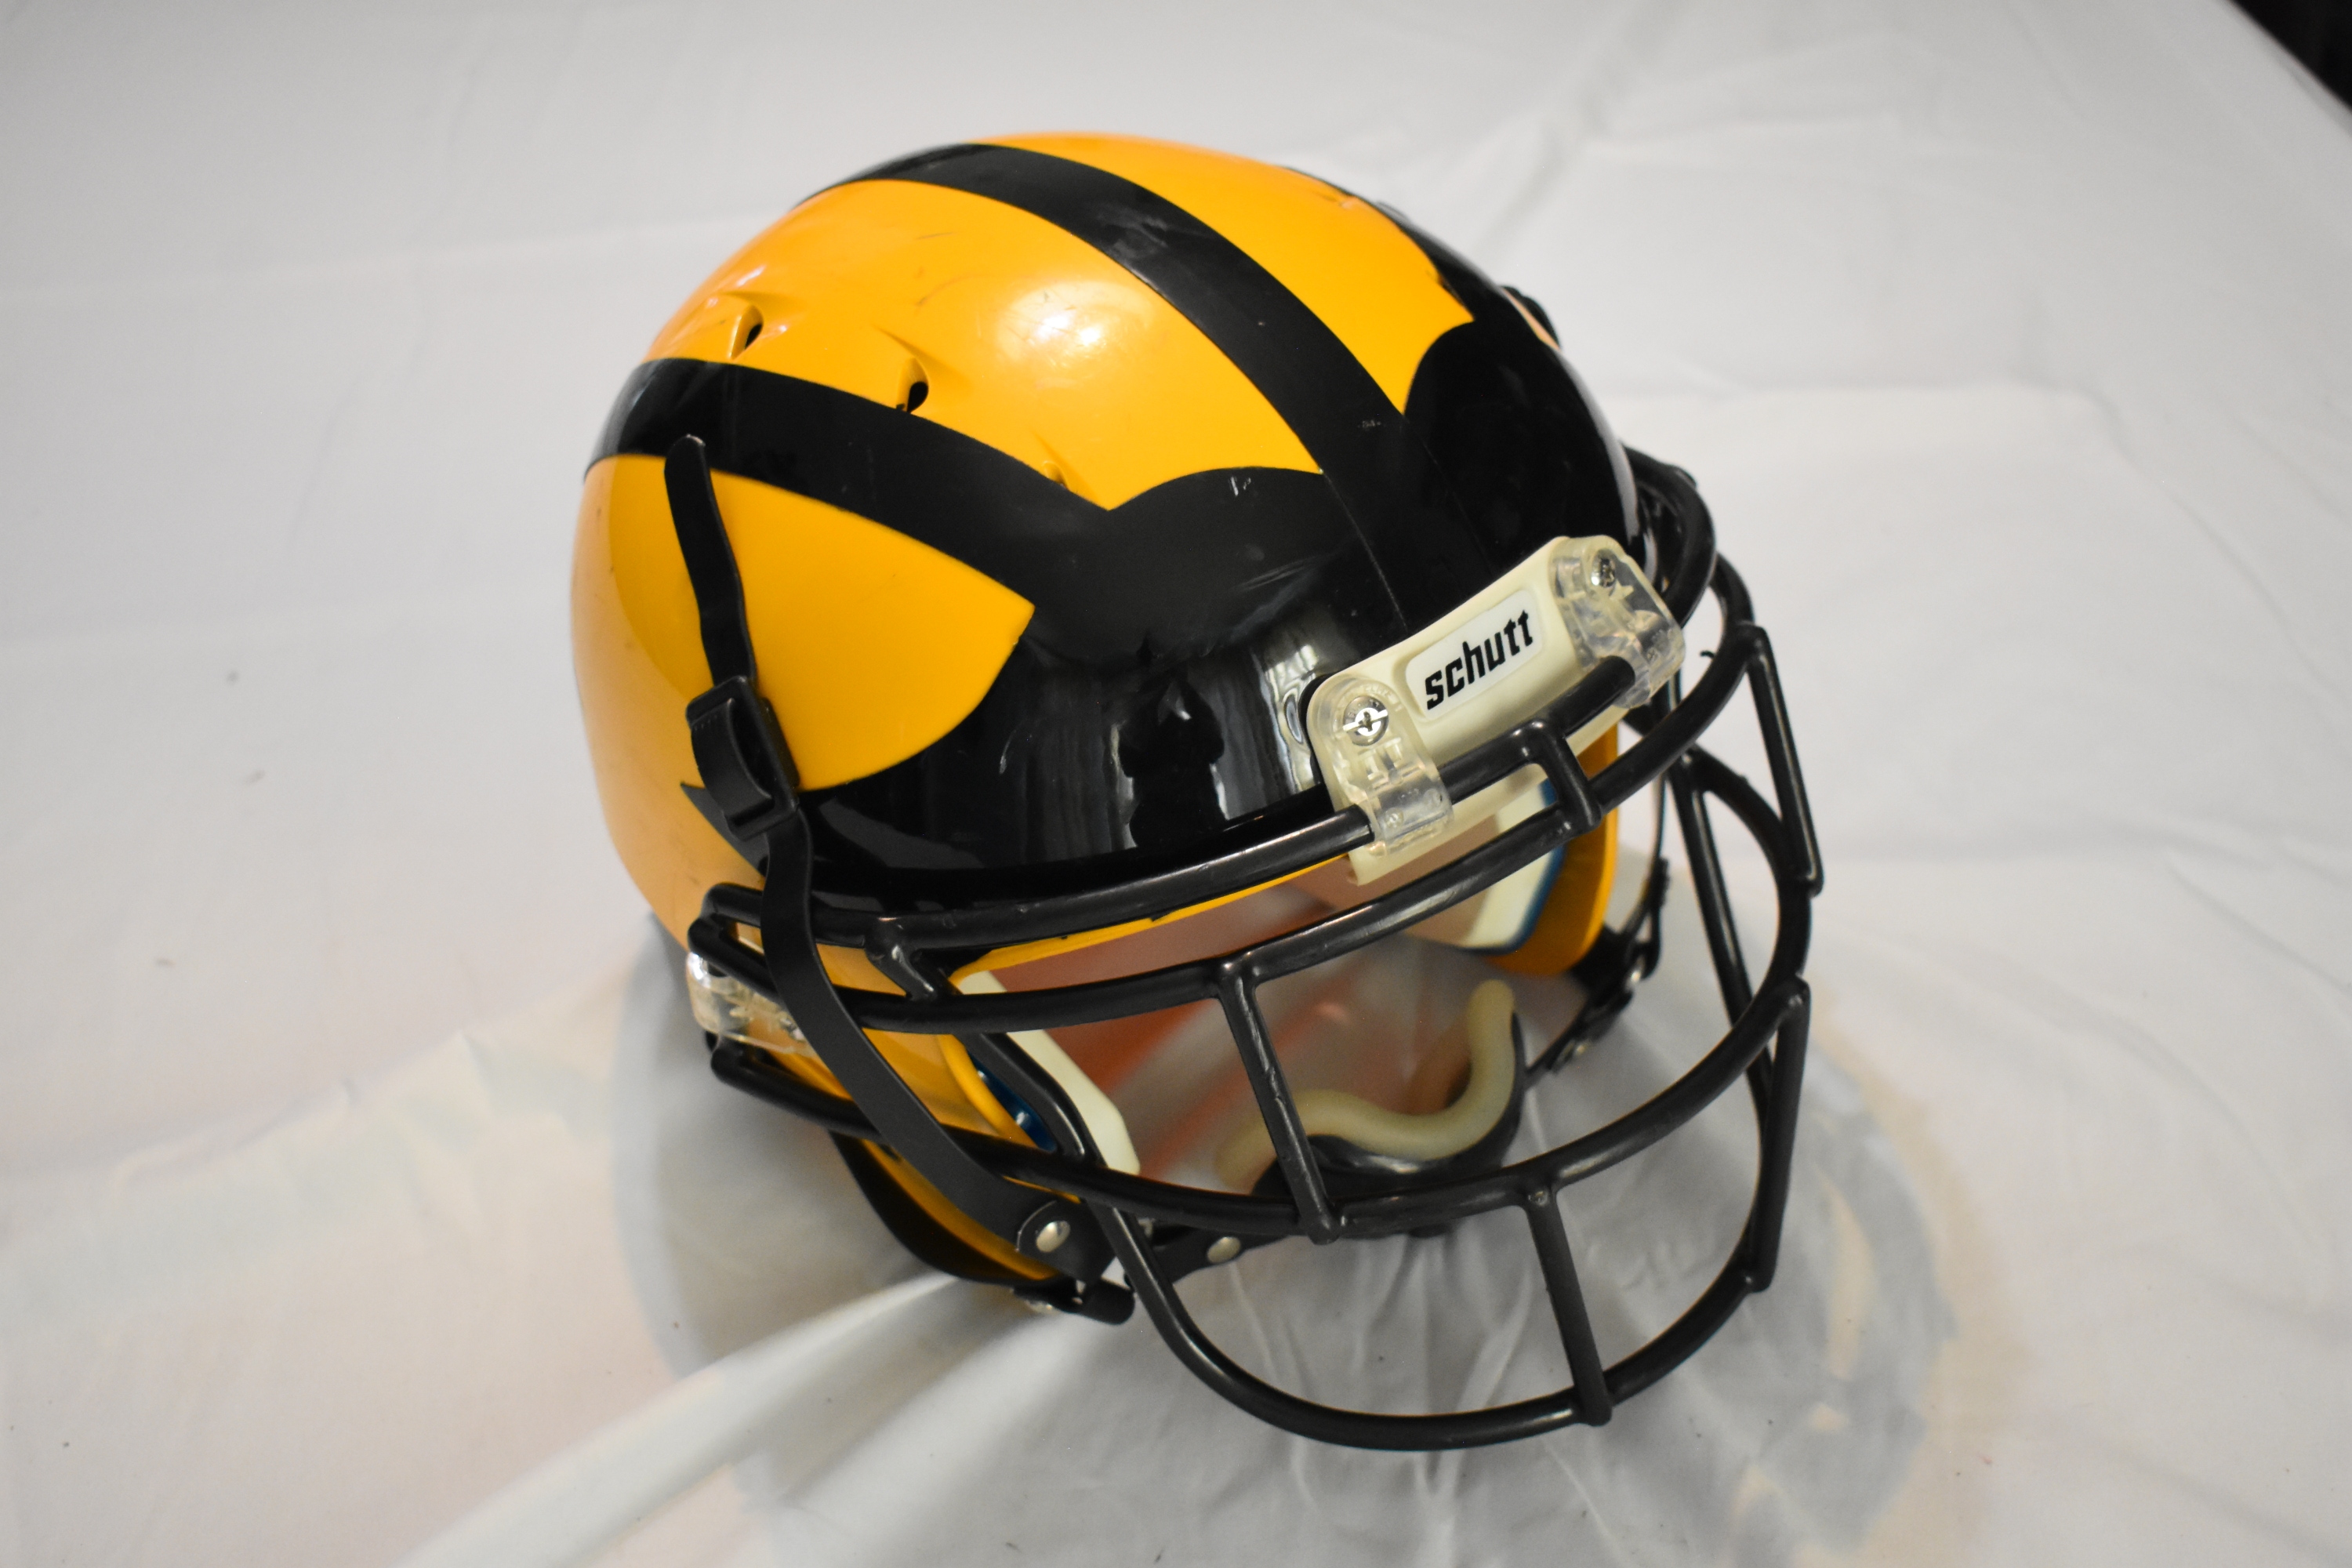 Schutt Youth Recruit Hybrid Football Helmet w/D30, Yellow, Medium - Good Condition!